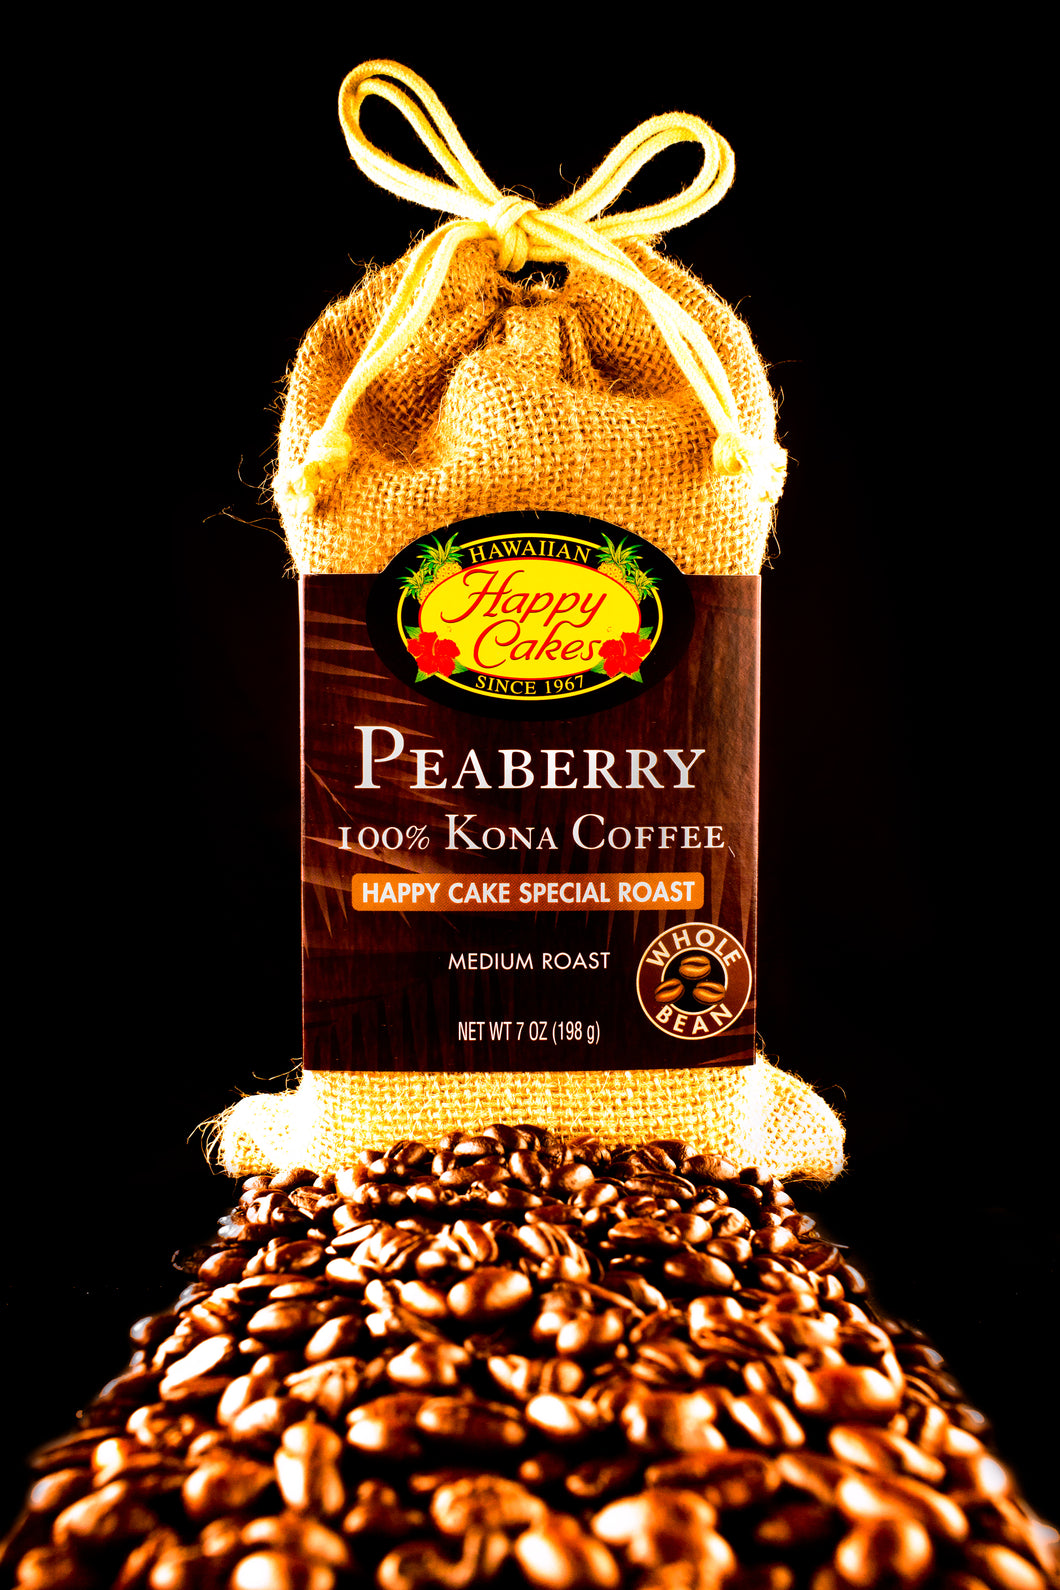 7oz  bag of 100% Kona Peaberry Coffee